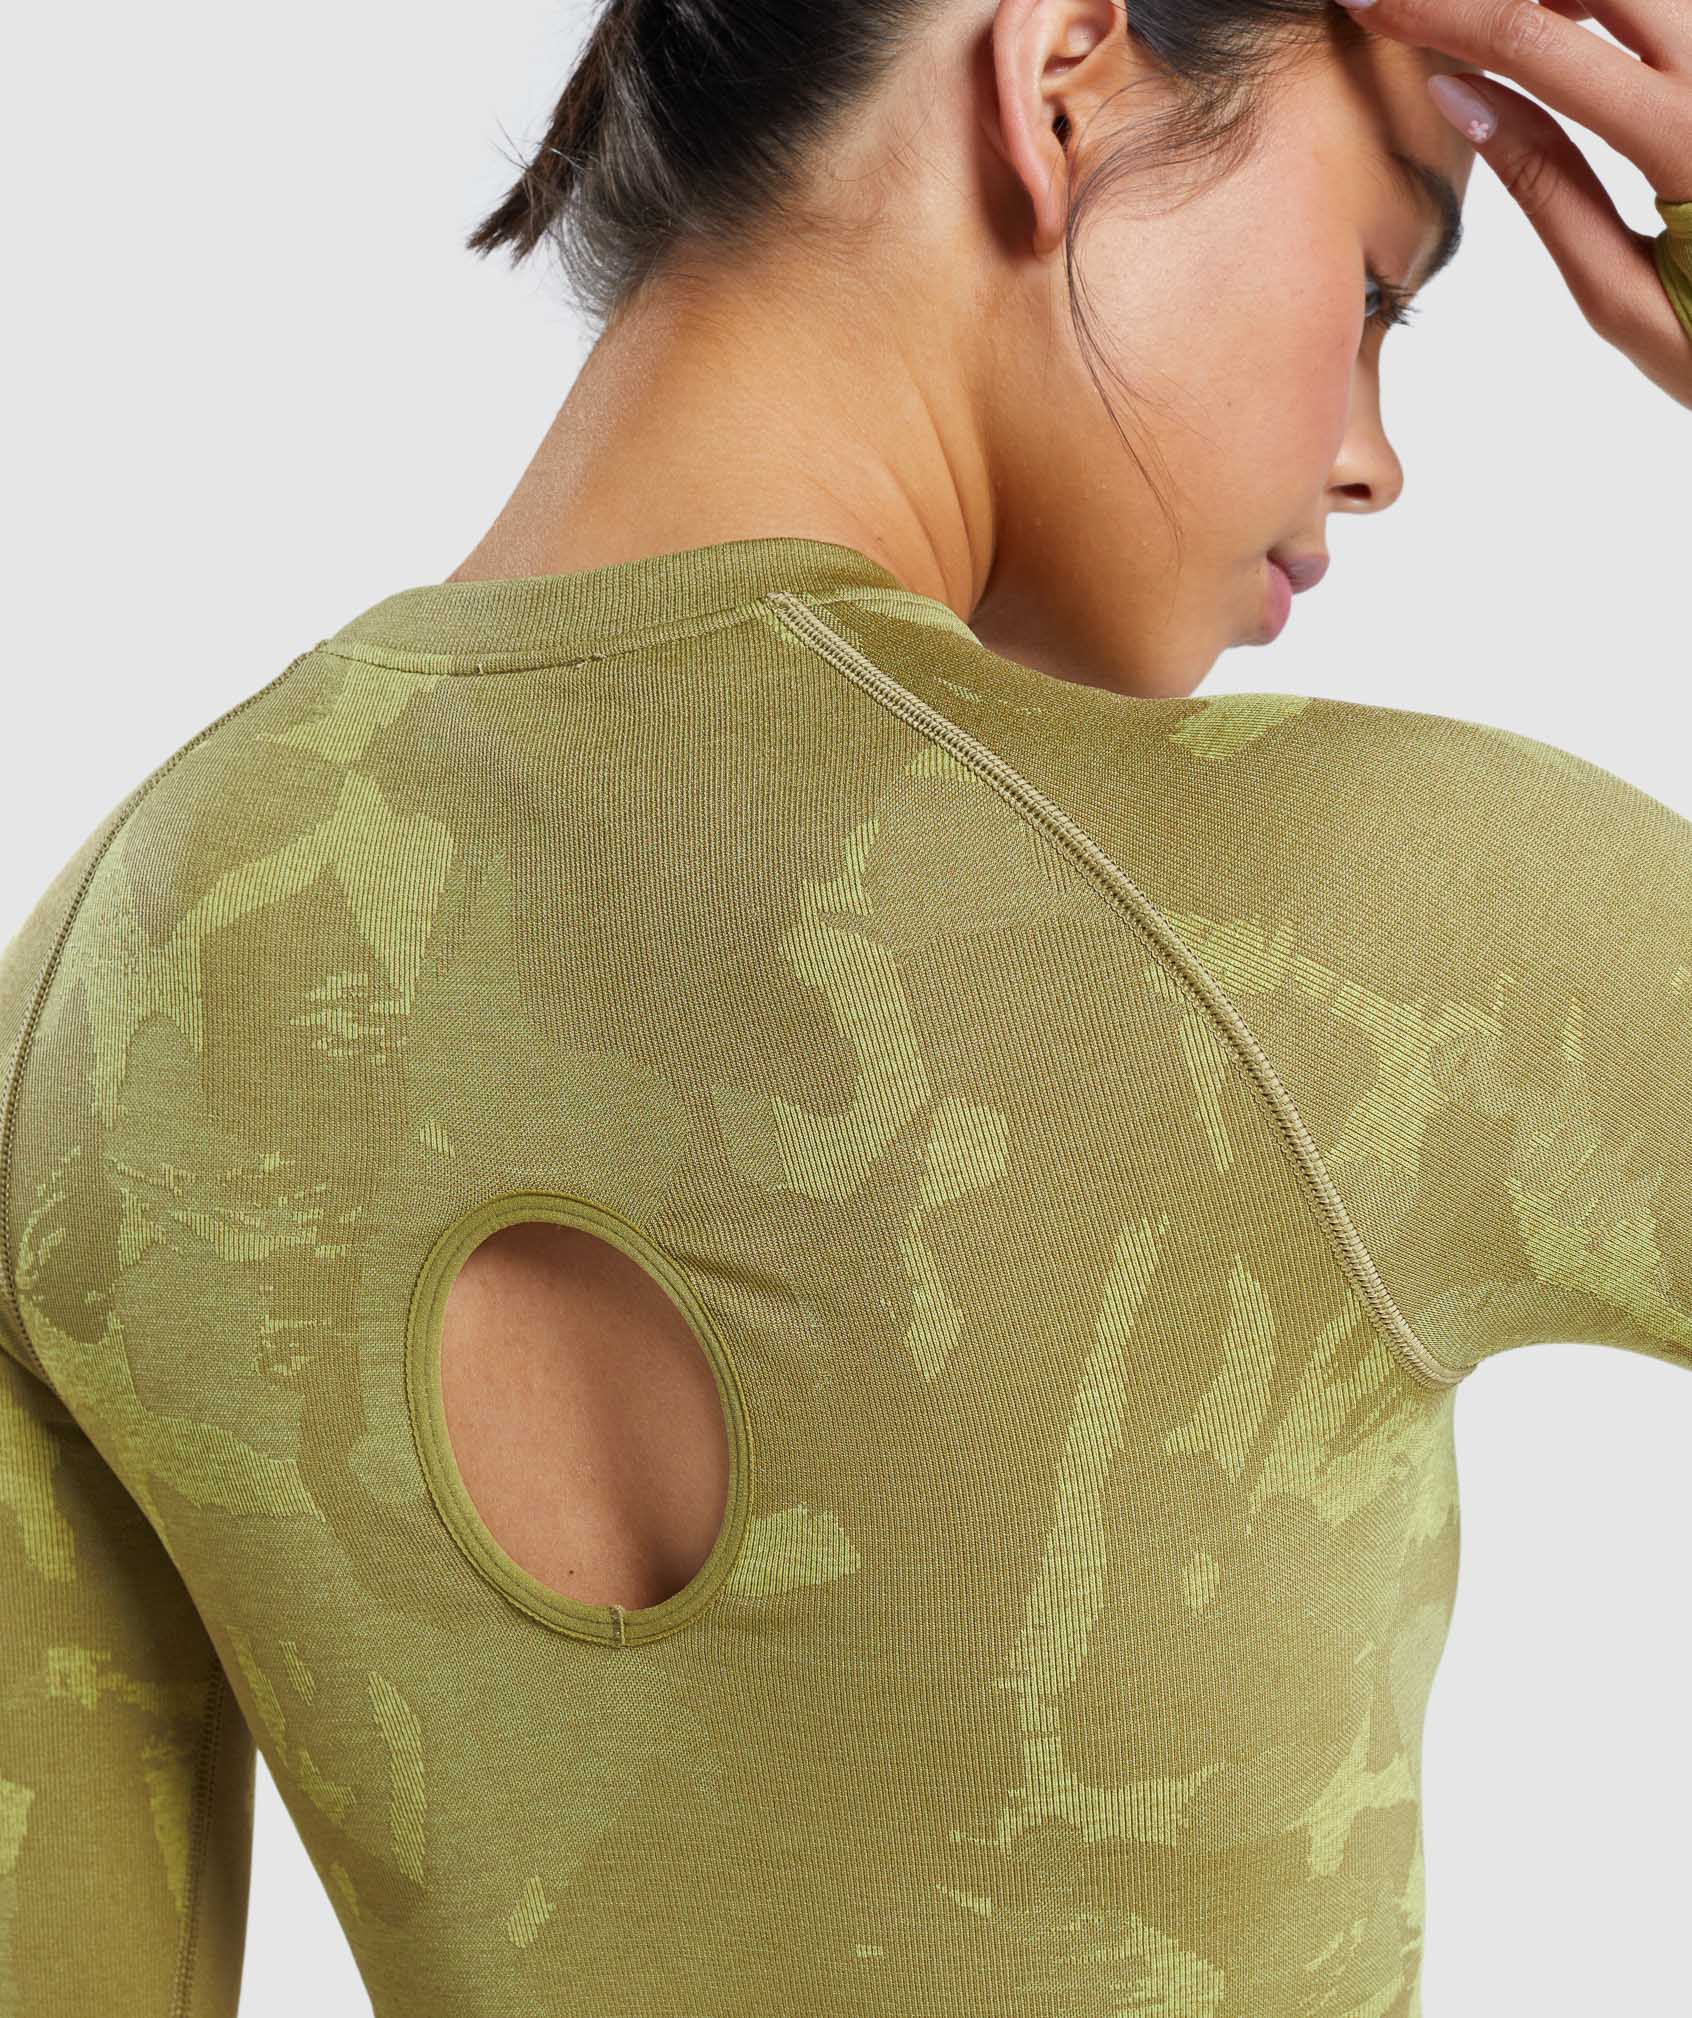 Gymshark Women's Camo Graphic Oversized T-Shirt, Teal Green, Medium :  : Fashion